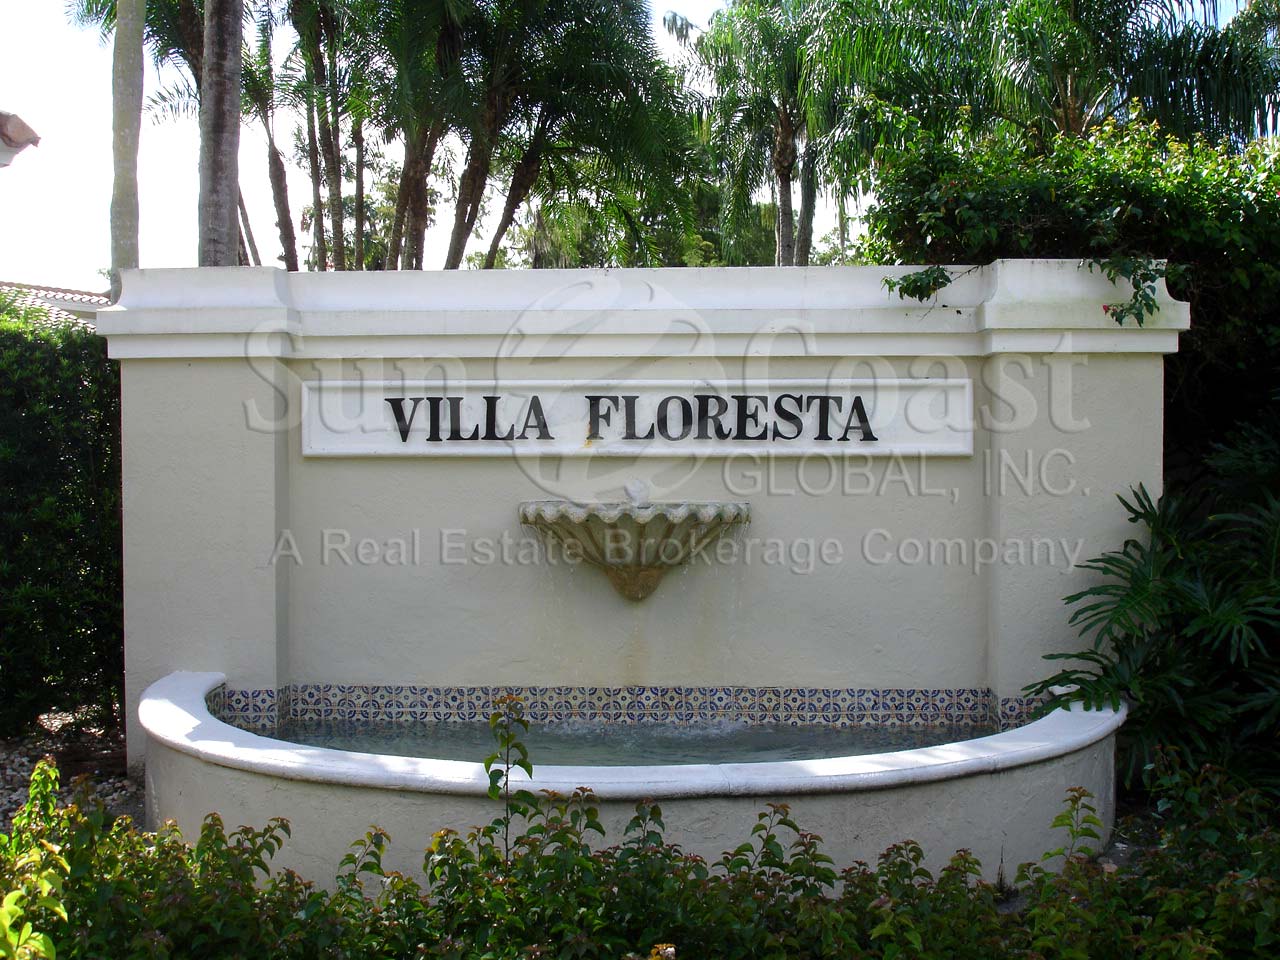 Villa Floresta Signage